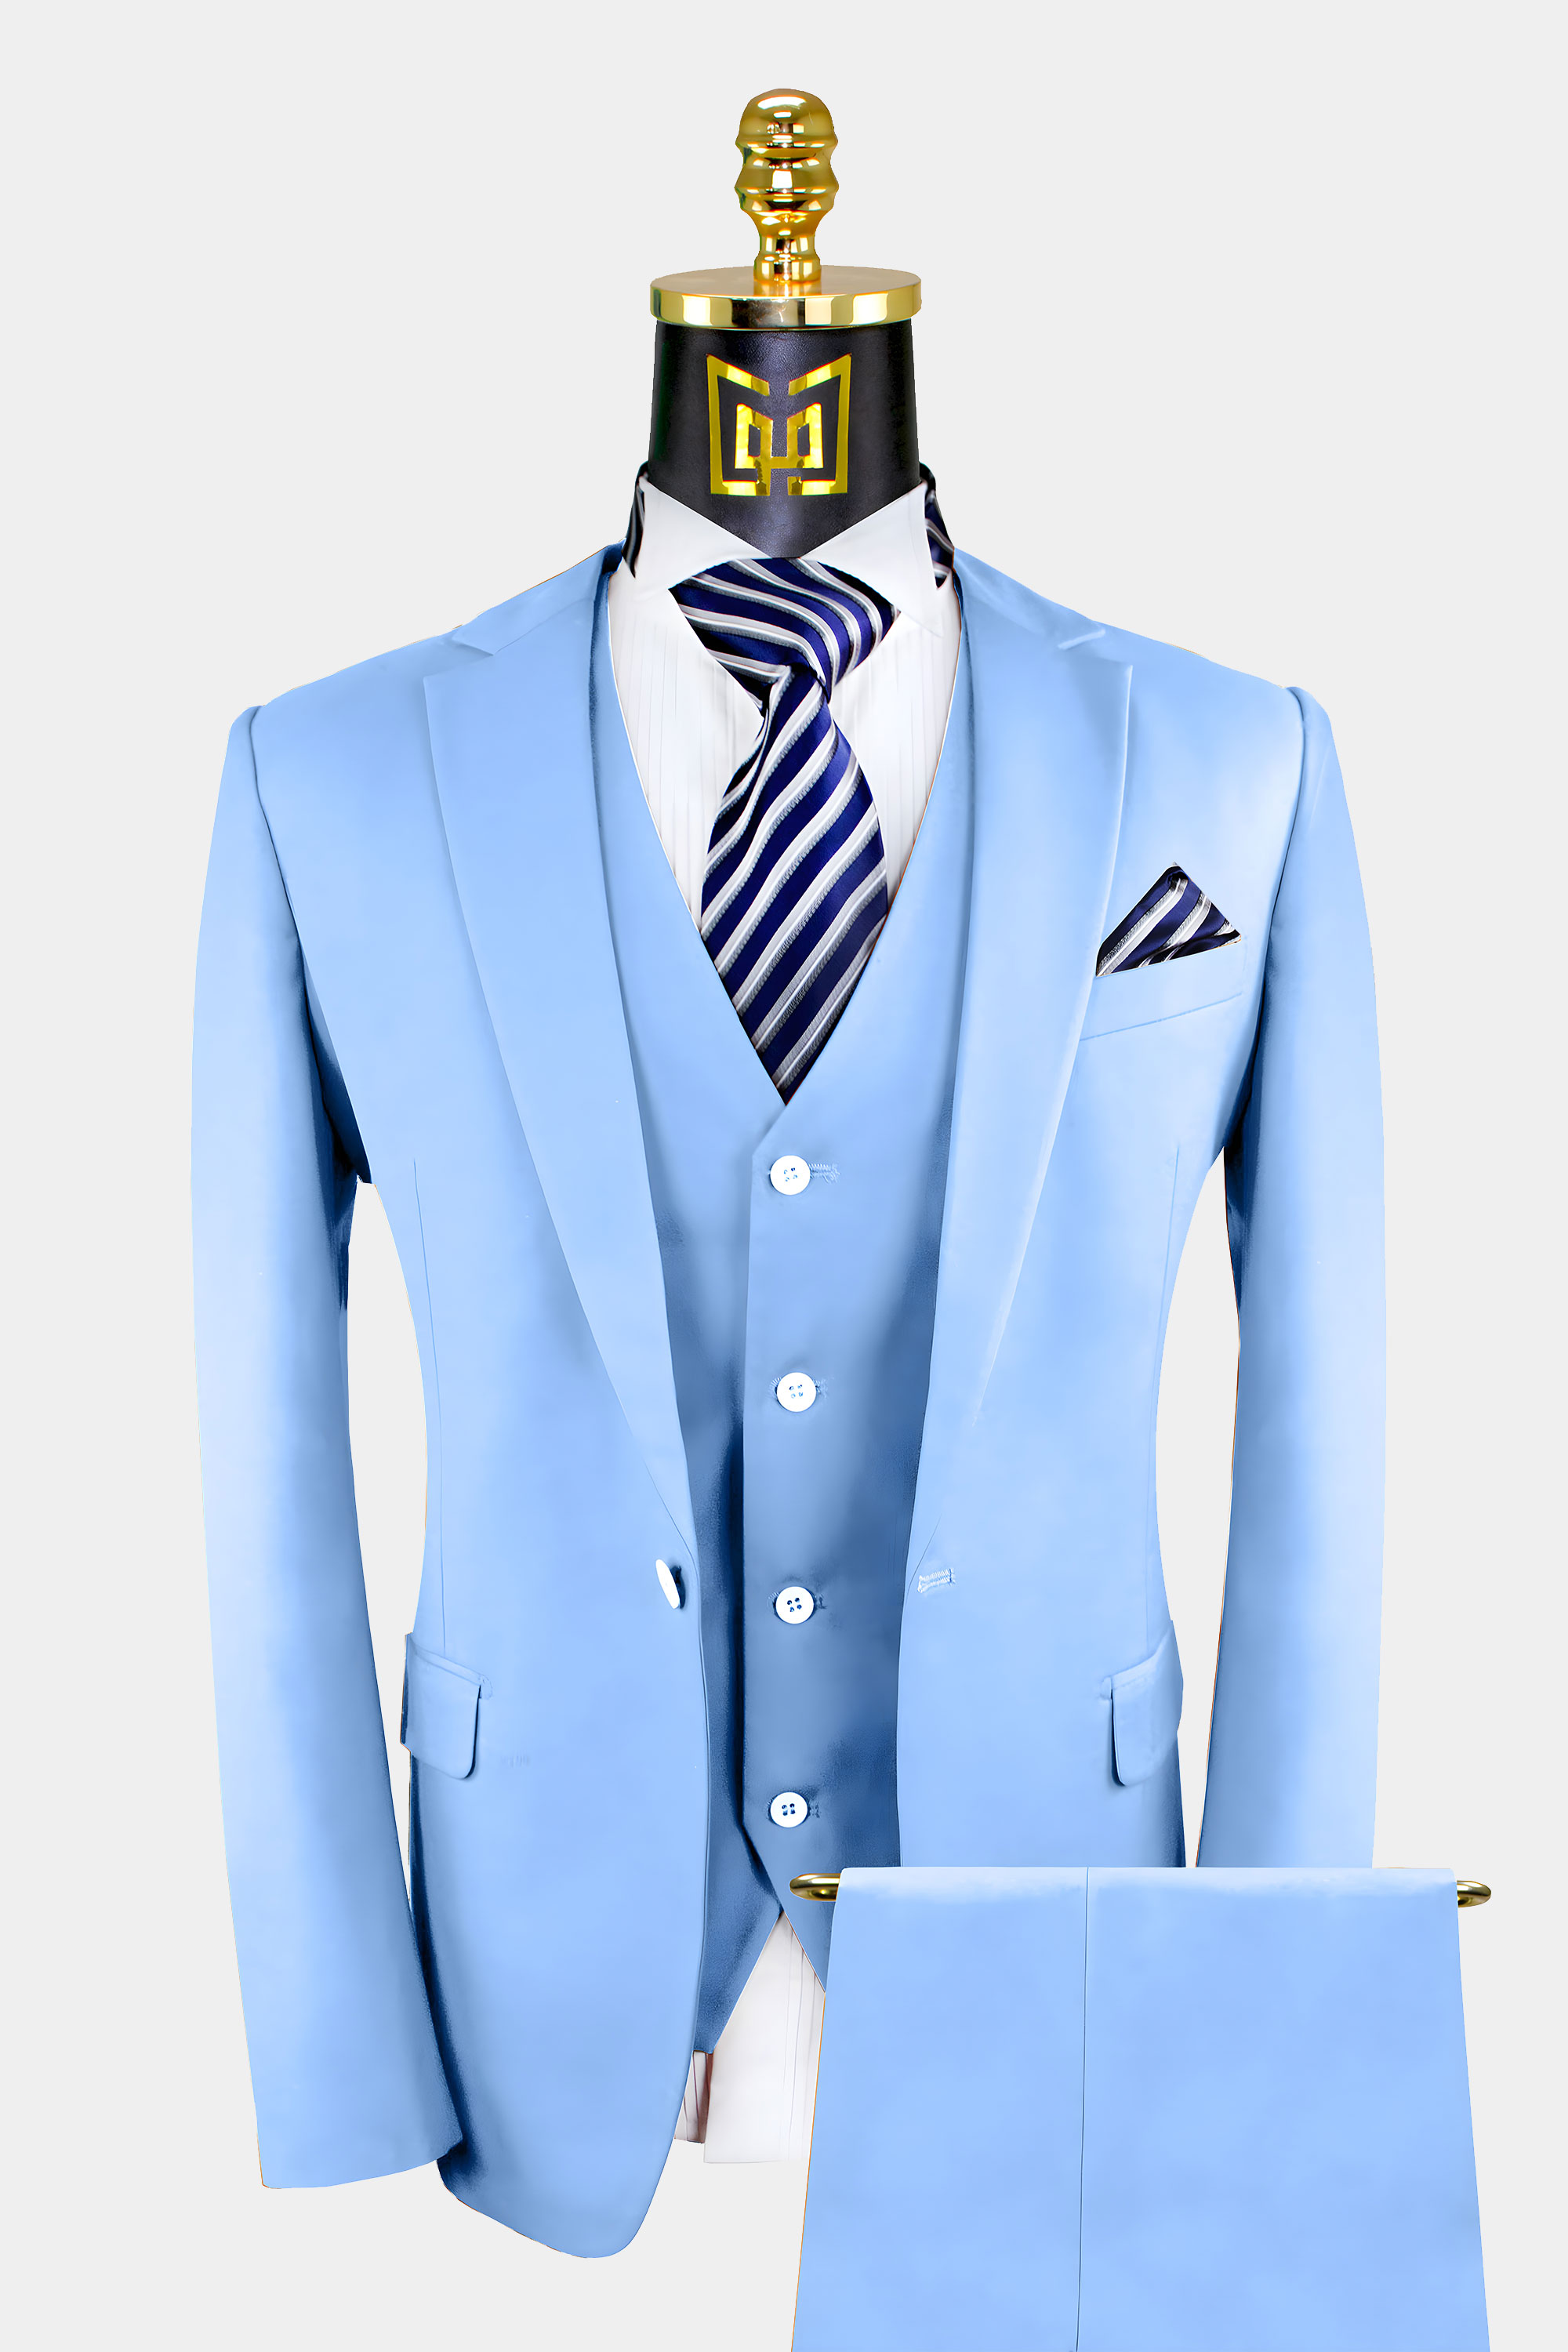 Men's Sky Blue Suit - 3 Piece